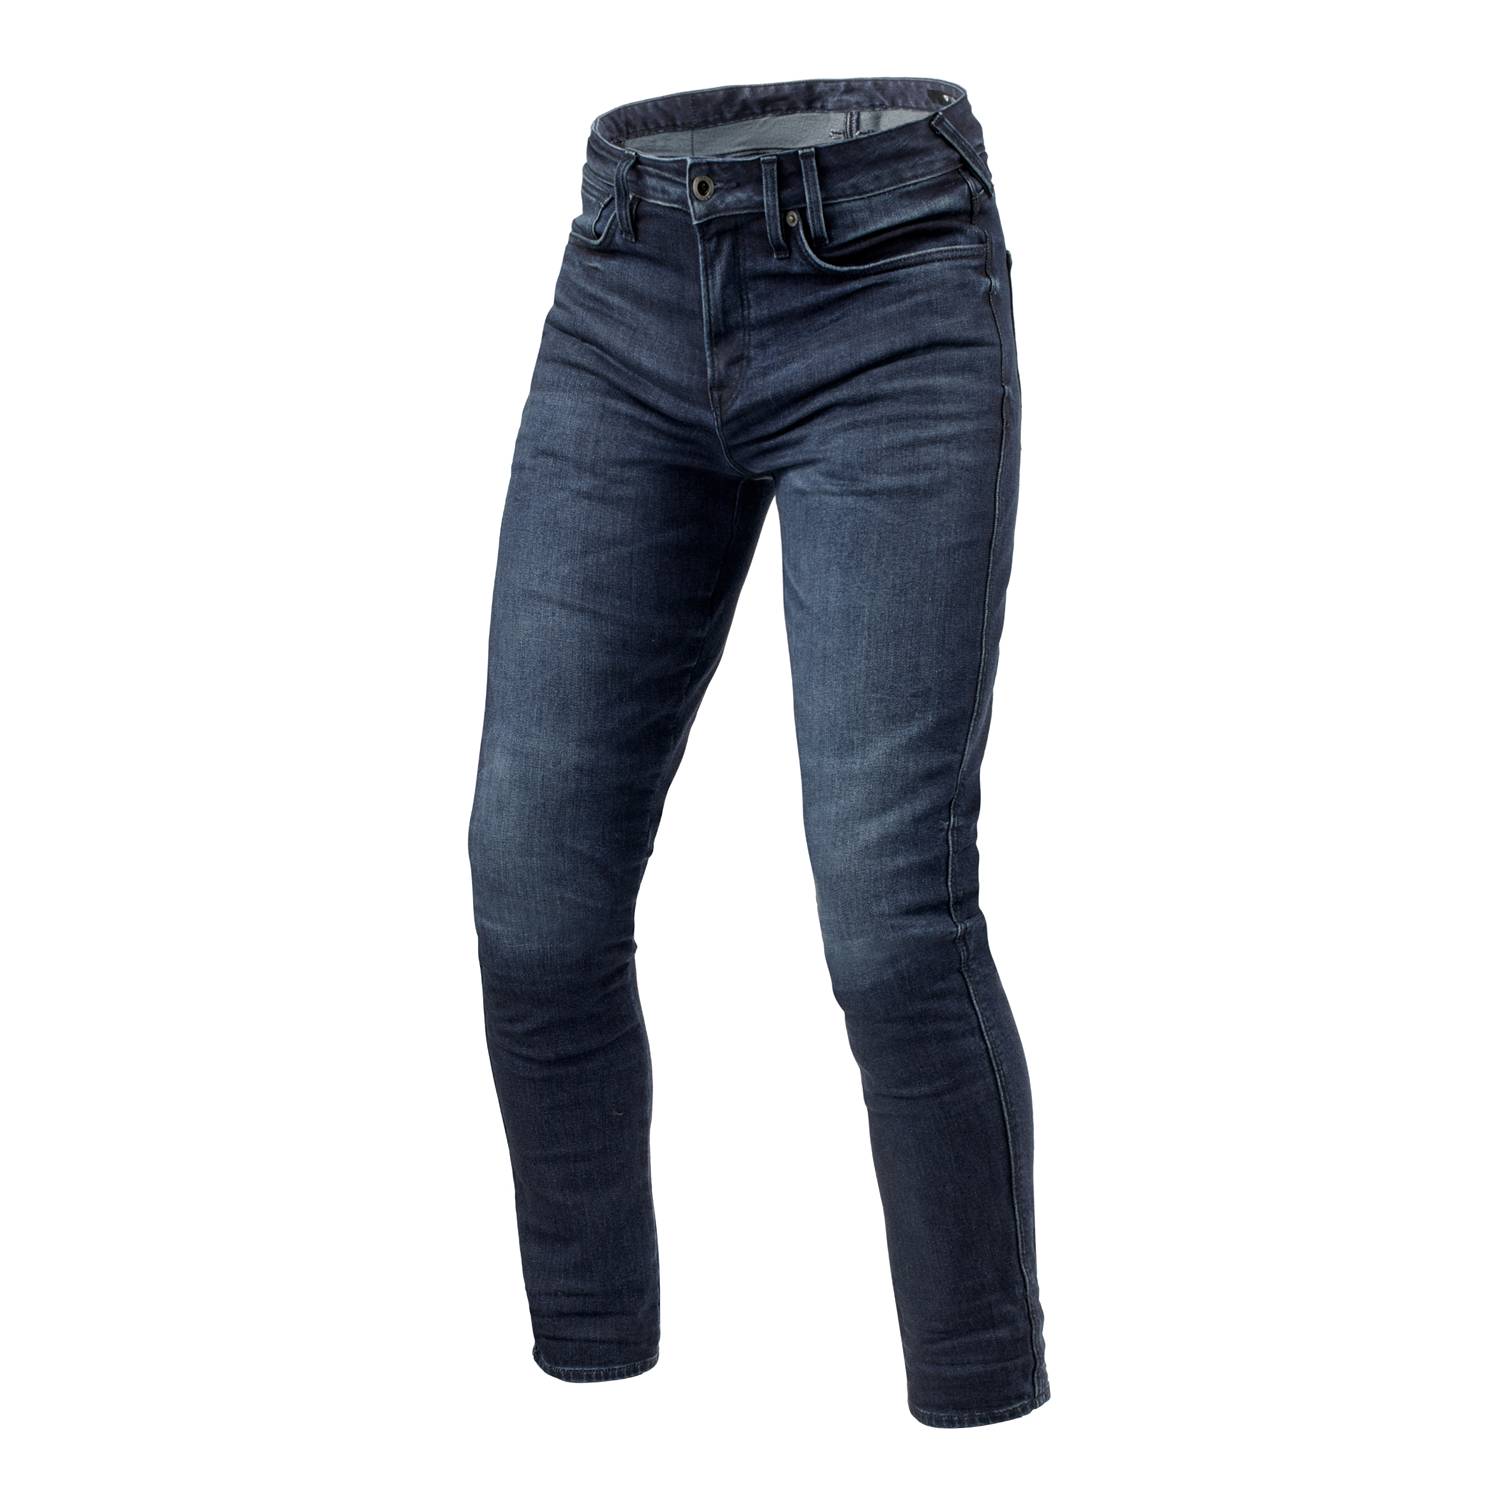 Image of REV'IT! Jeans Carlin SK Dark Blue Used L34 Motorcycle Jeans Größe L34/W36